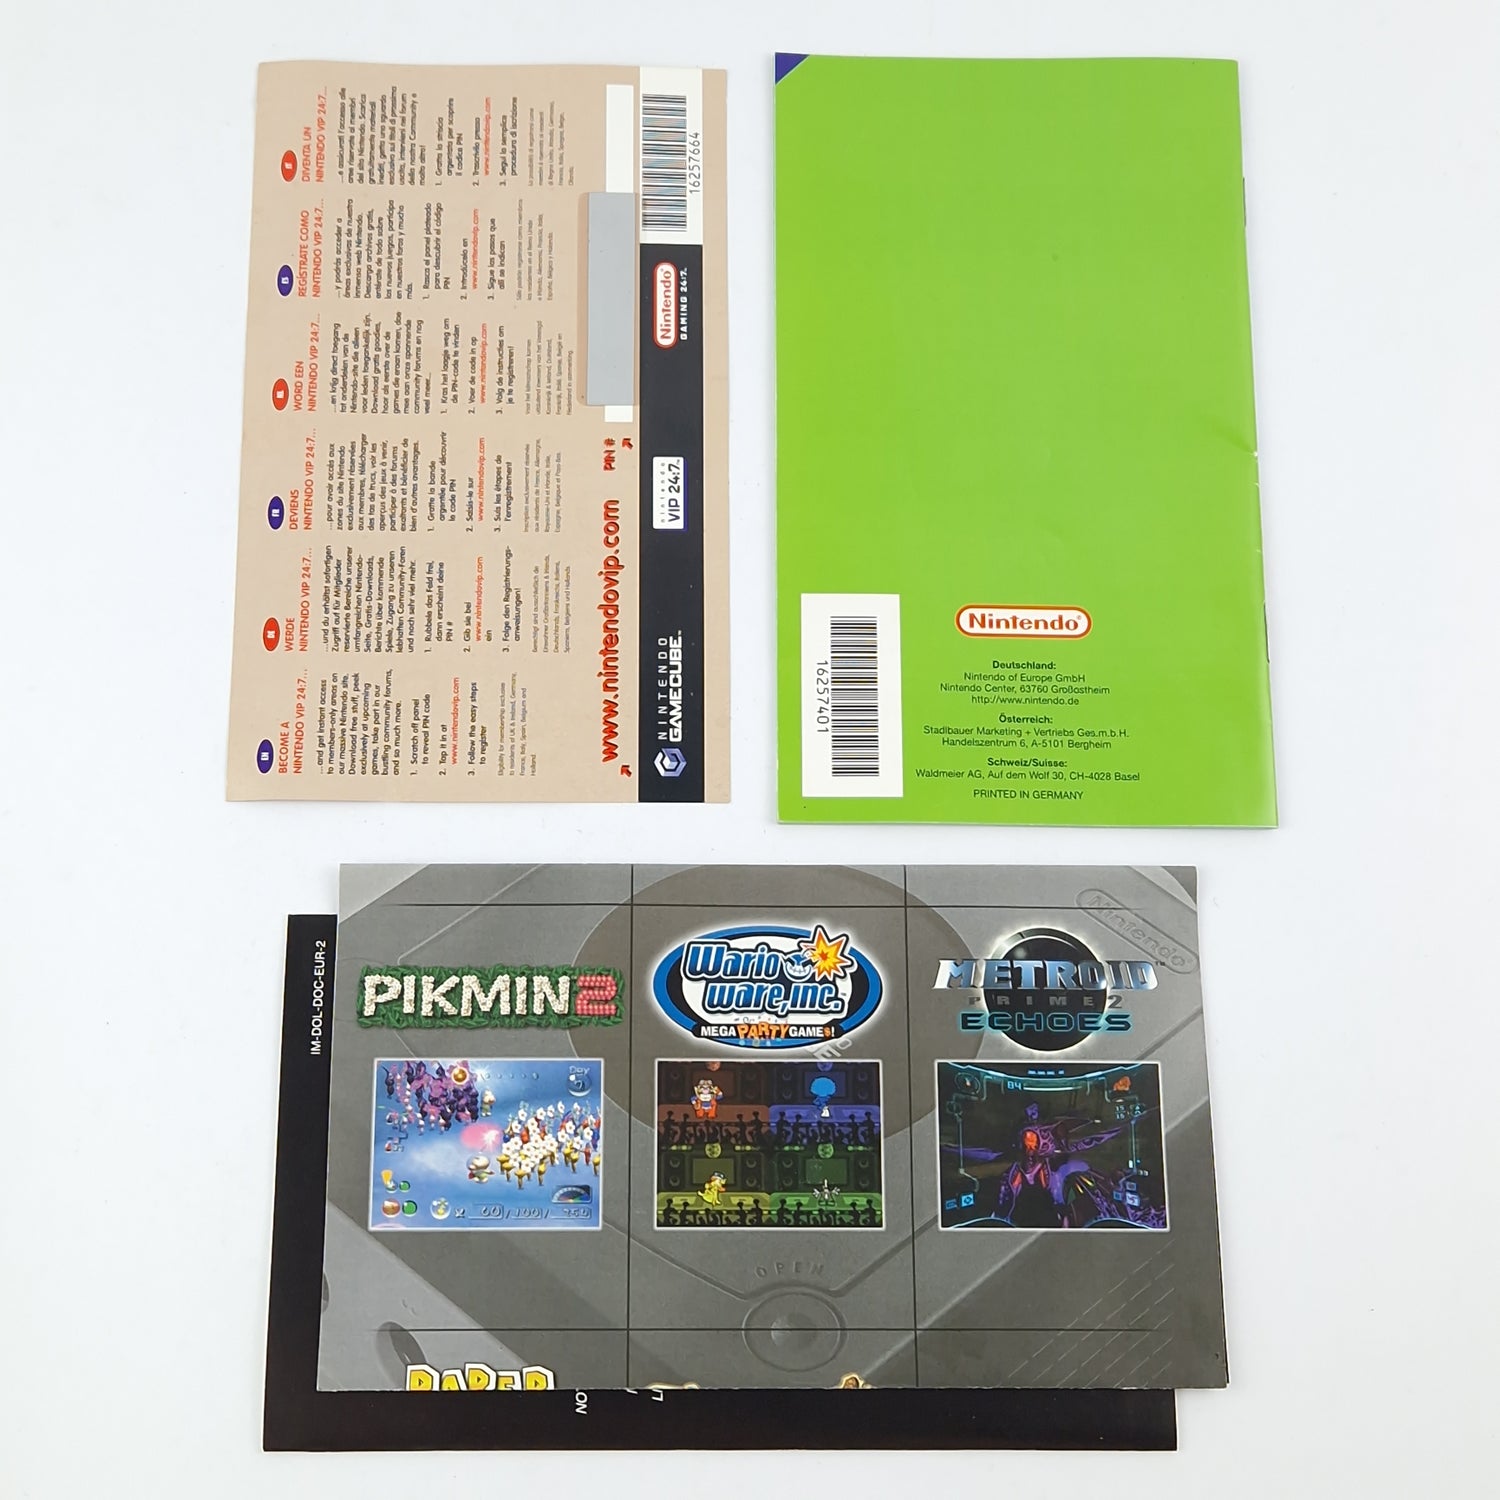 Nintendo Gamecube game: Mario Power Tennis - CD instructions OVP / PAL GC